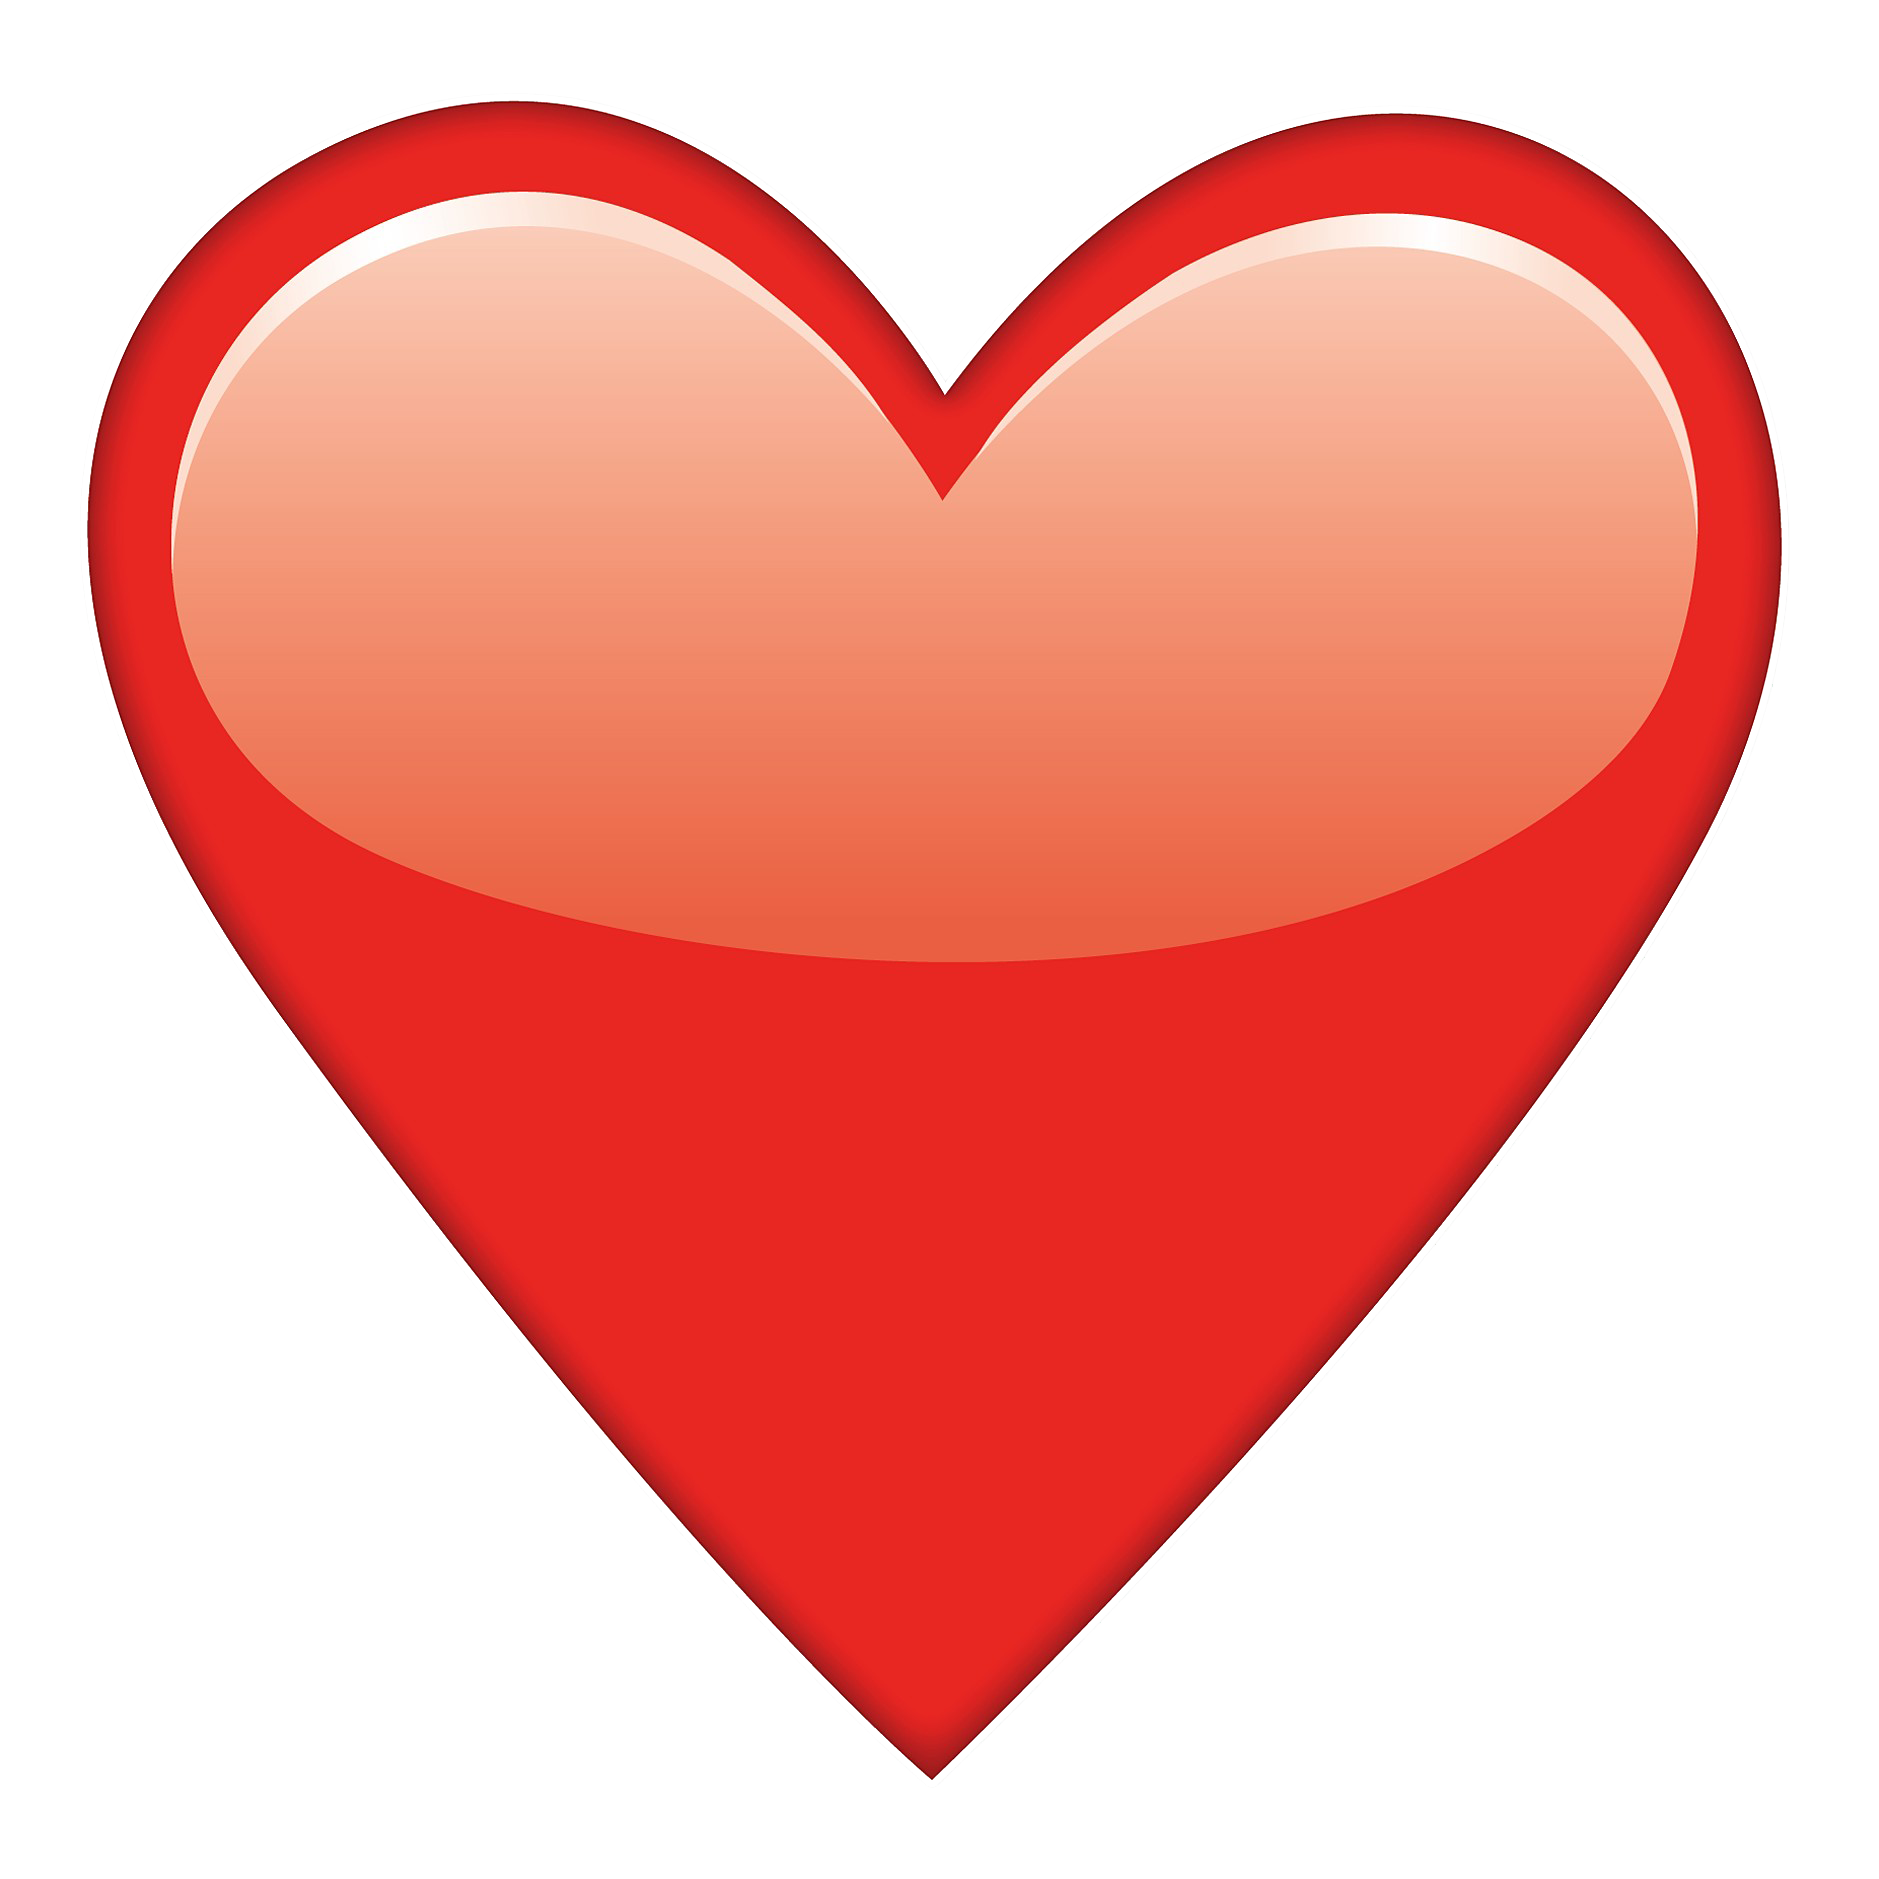 Twitter Emoji Heart PNG Image Background